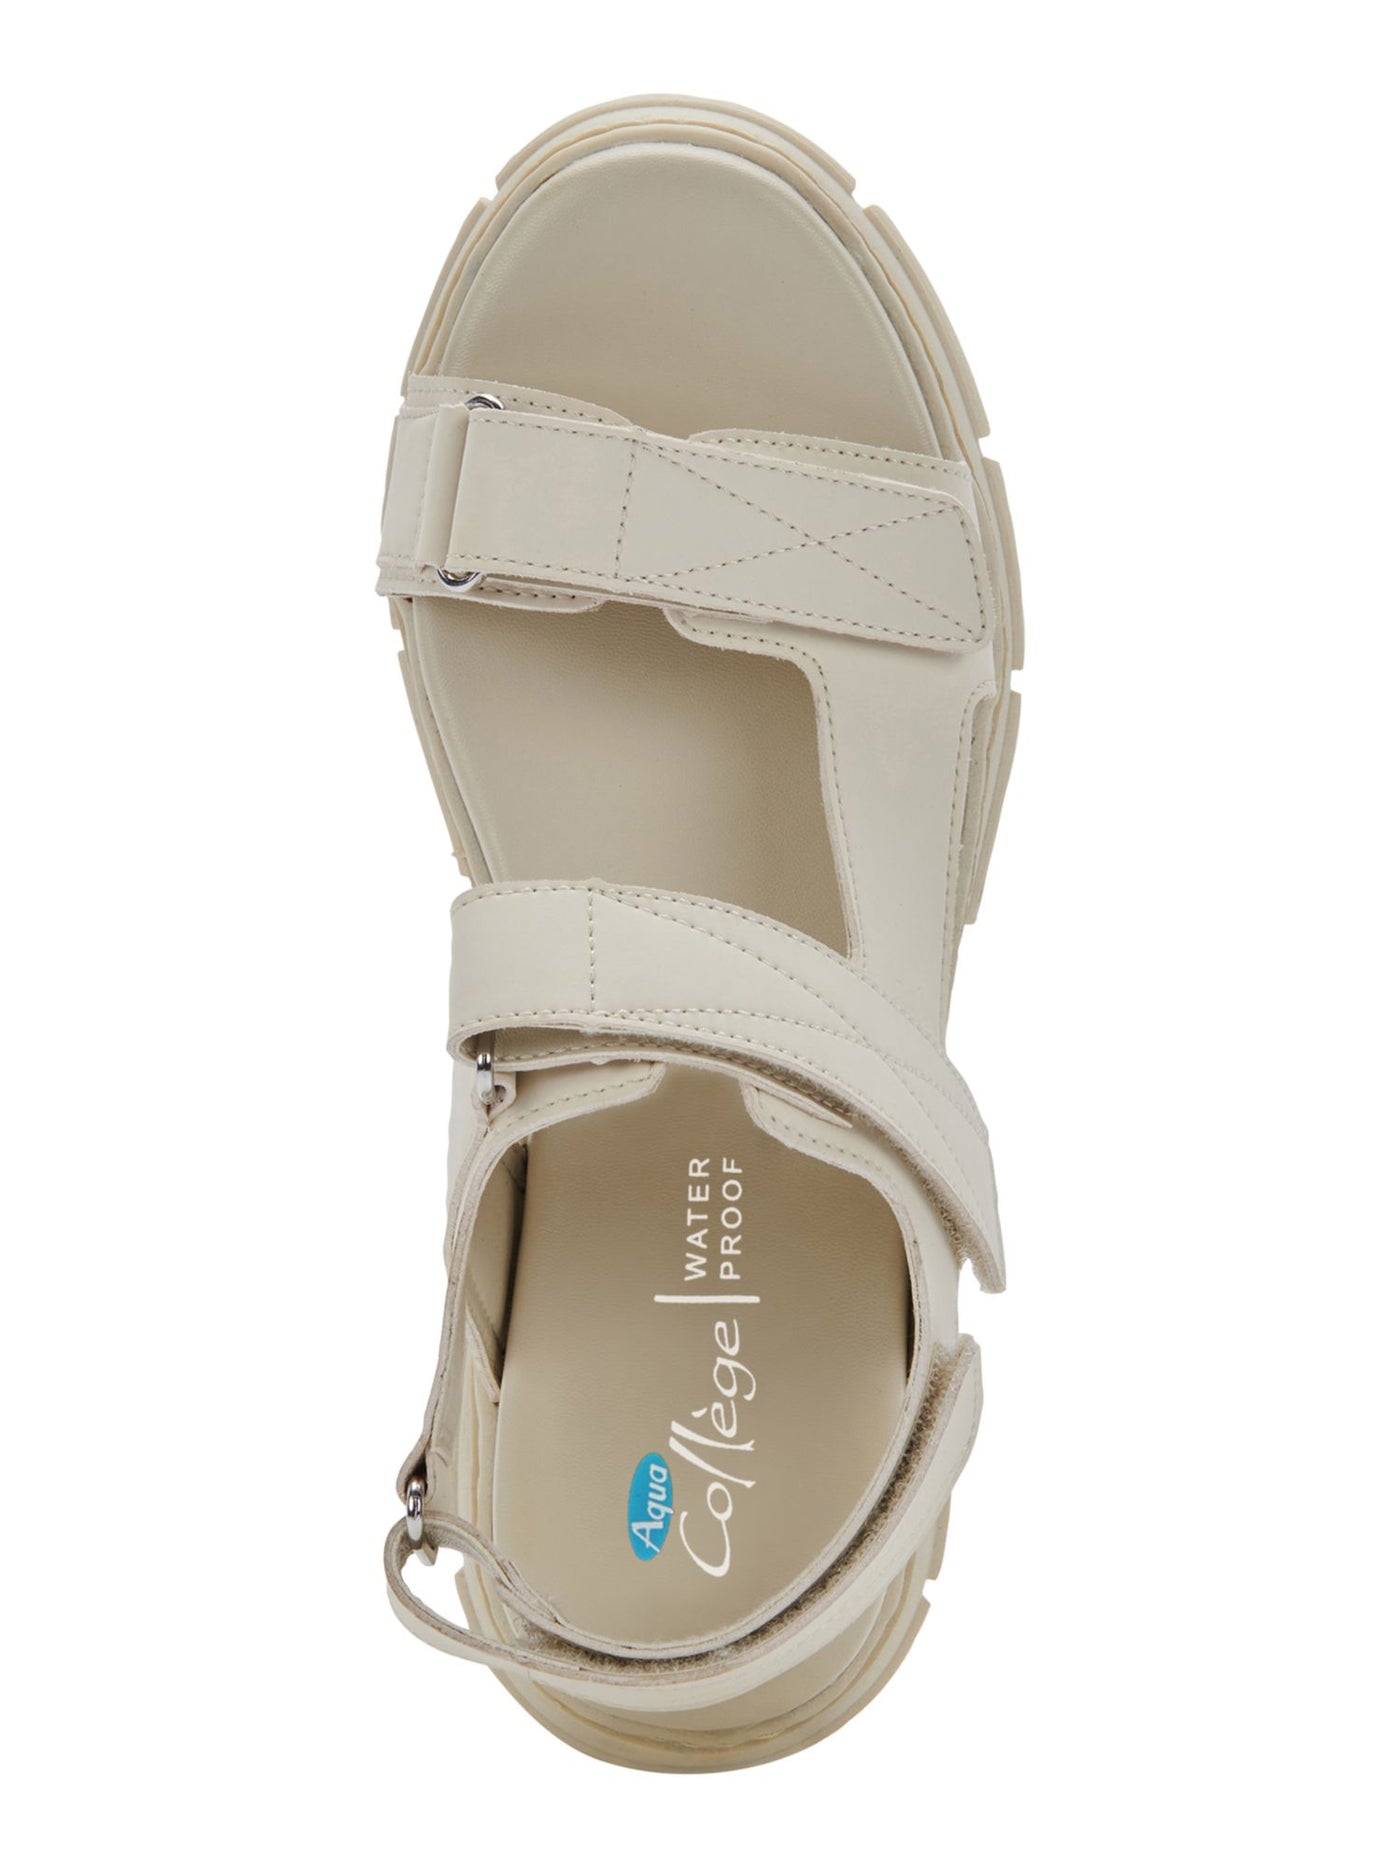 AQUA COLLEGE Womens Ivory Adjustable Waterproof Hux Round Toe Platform Slingback Sandal 7 M